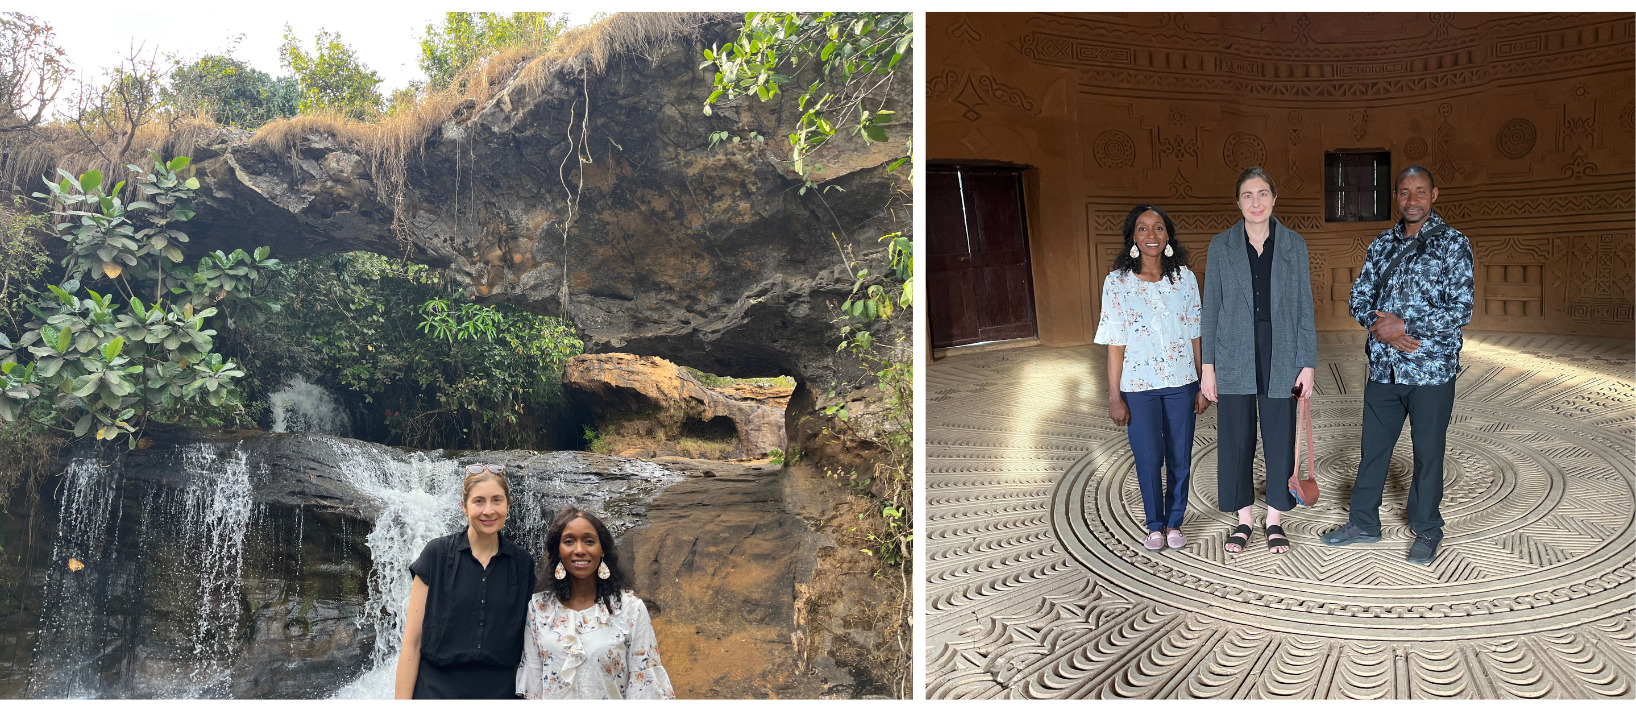 April and Aissata visit Dalaba, Guinea, and its beautiful surroundings. 